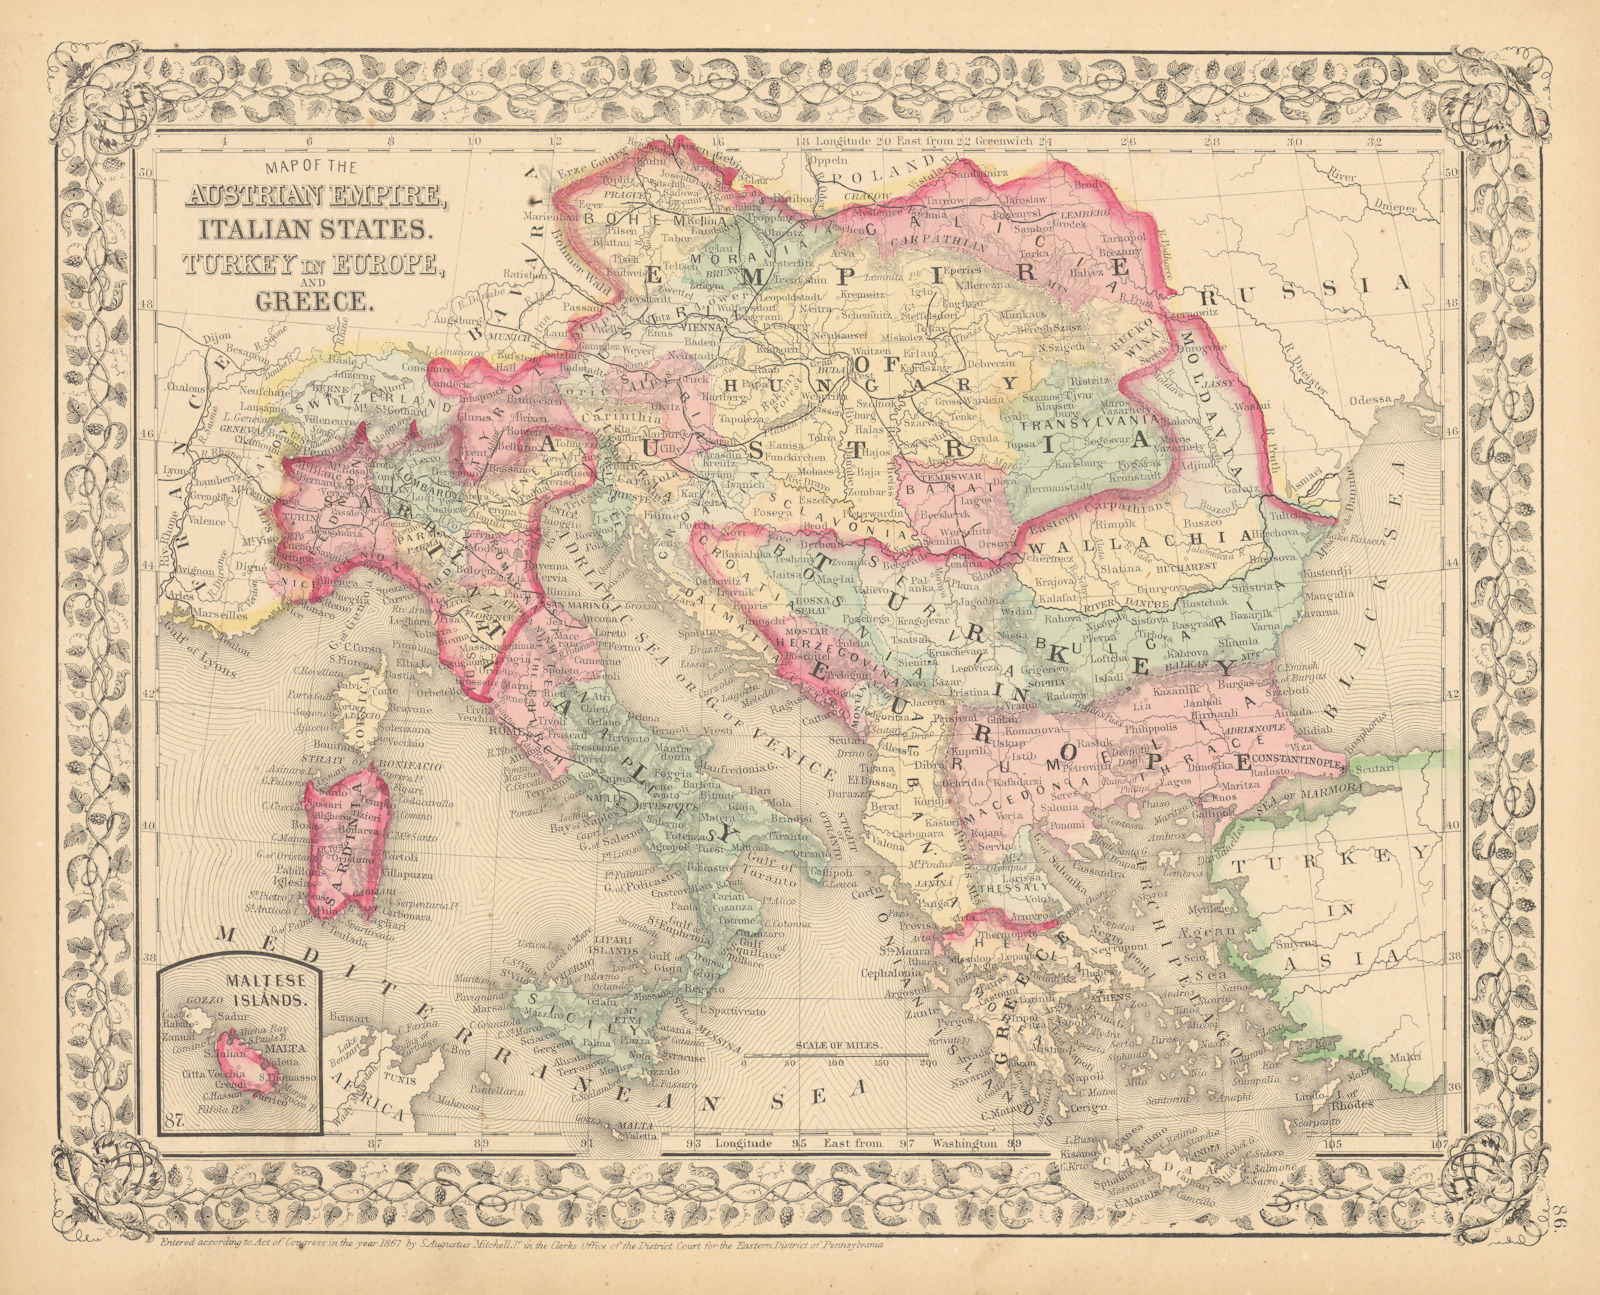 Austrian Empire, Italian States, Turkey in Europe & Greece. MITCHELL 1869 map